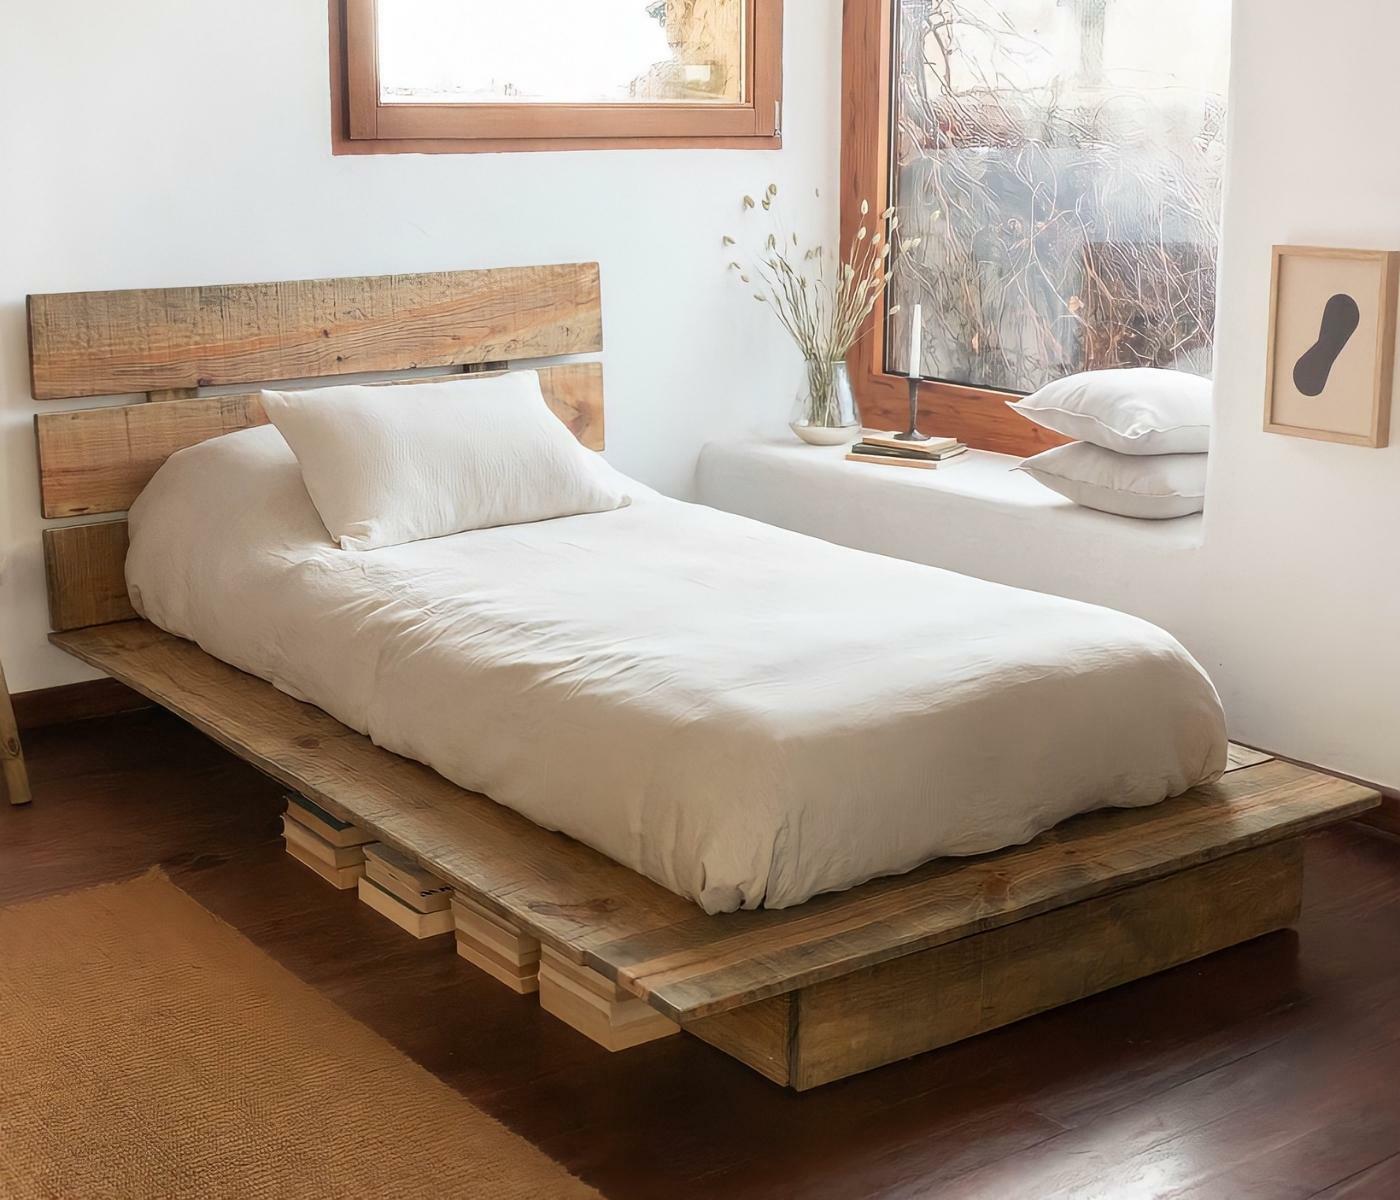  Tatami-Einzelbettgestell aus recyceltem Holz 5